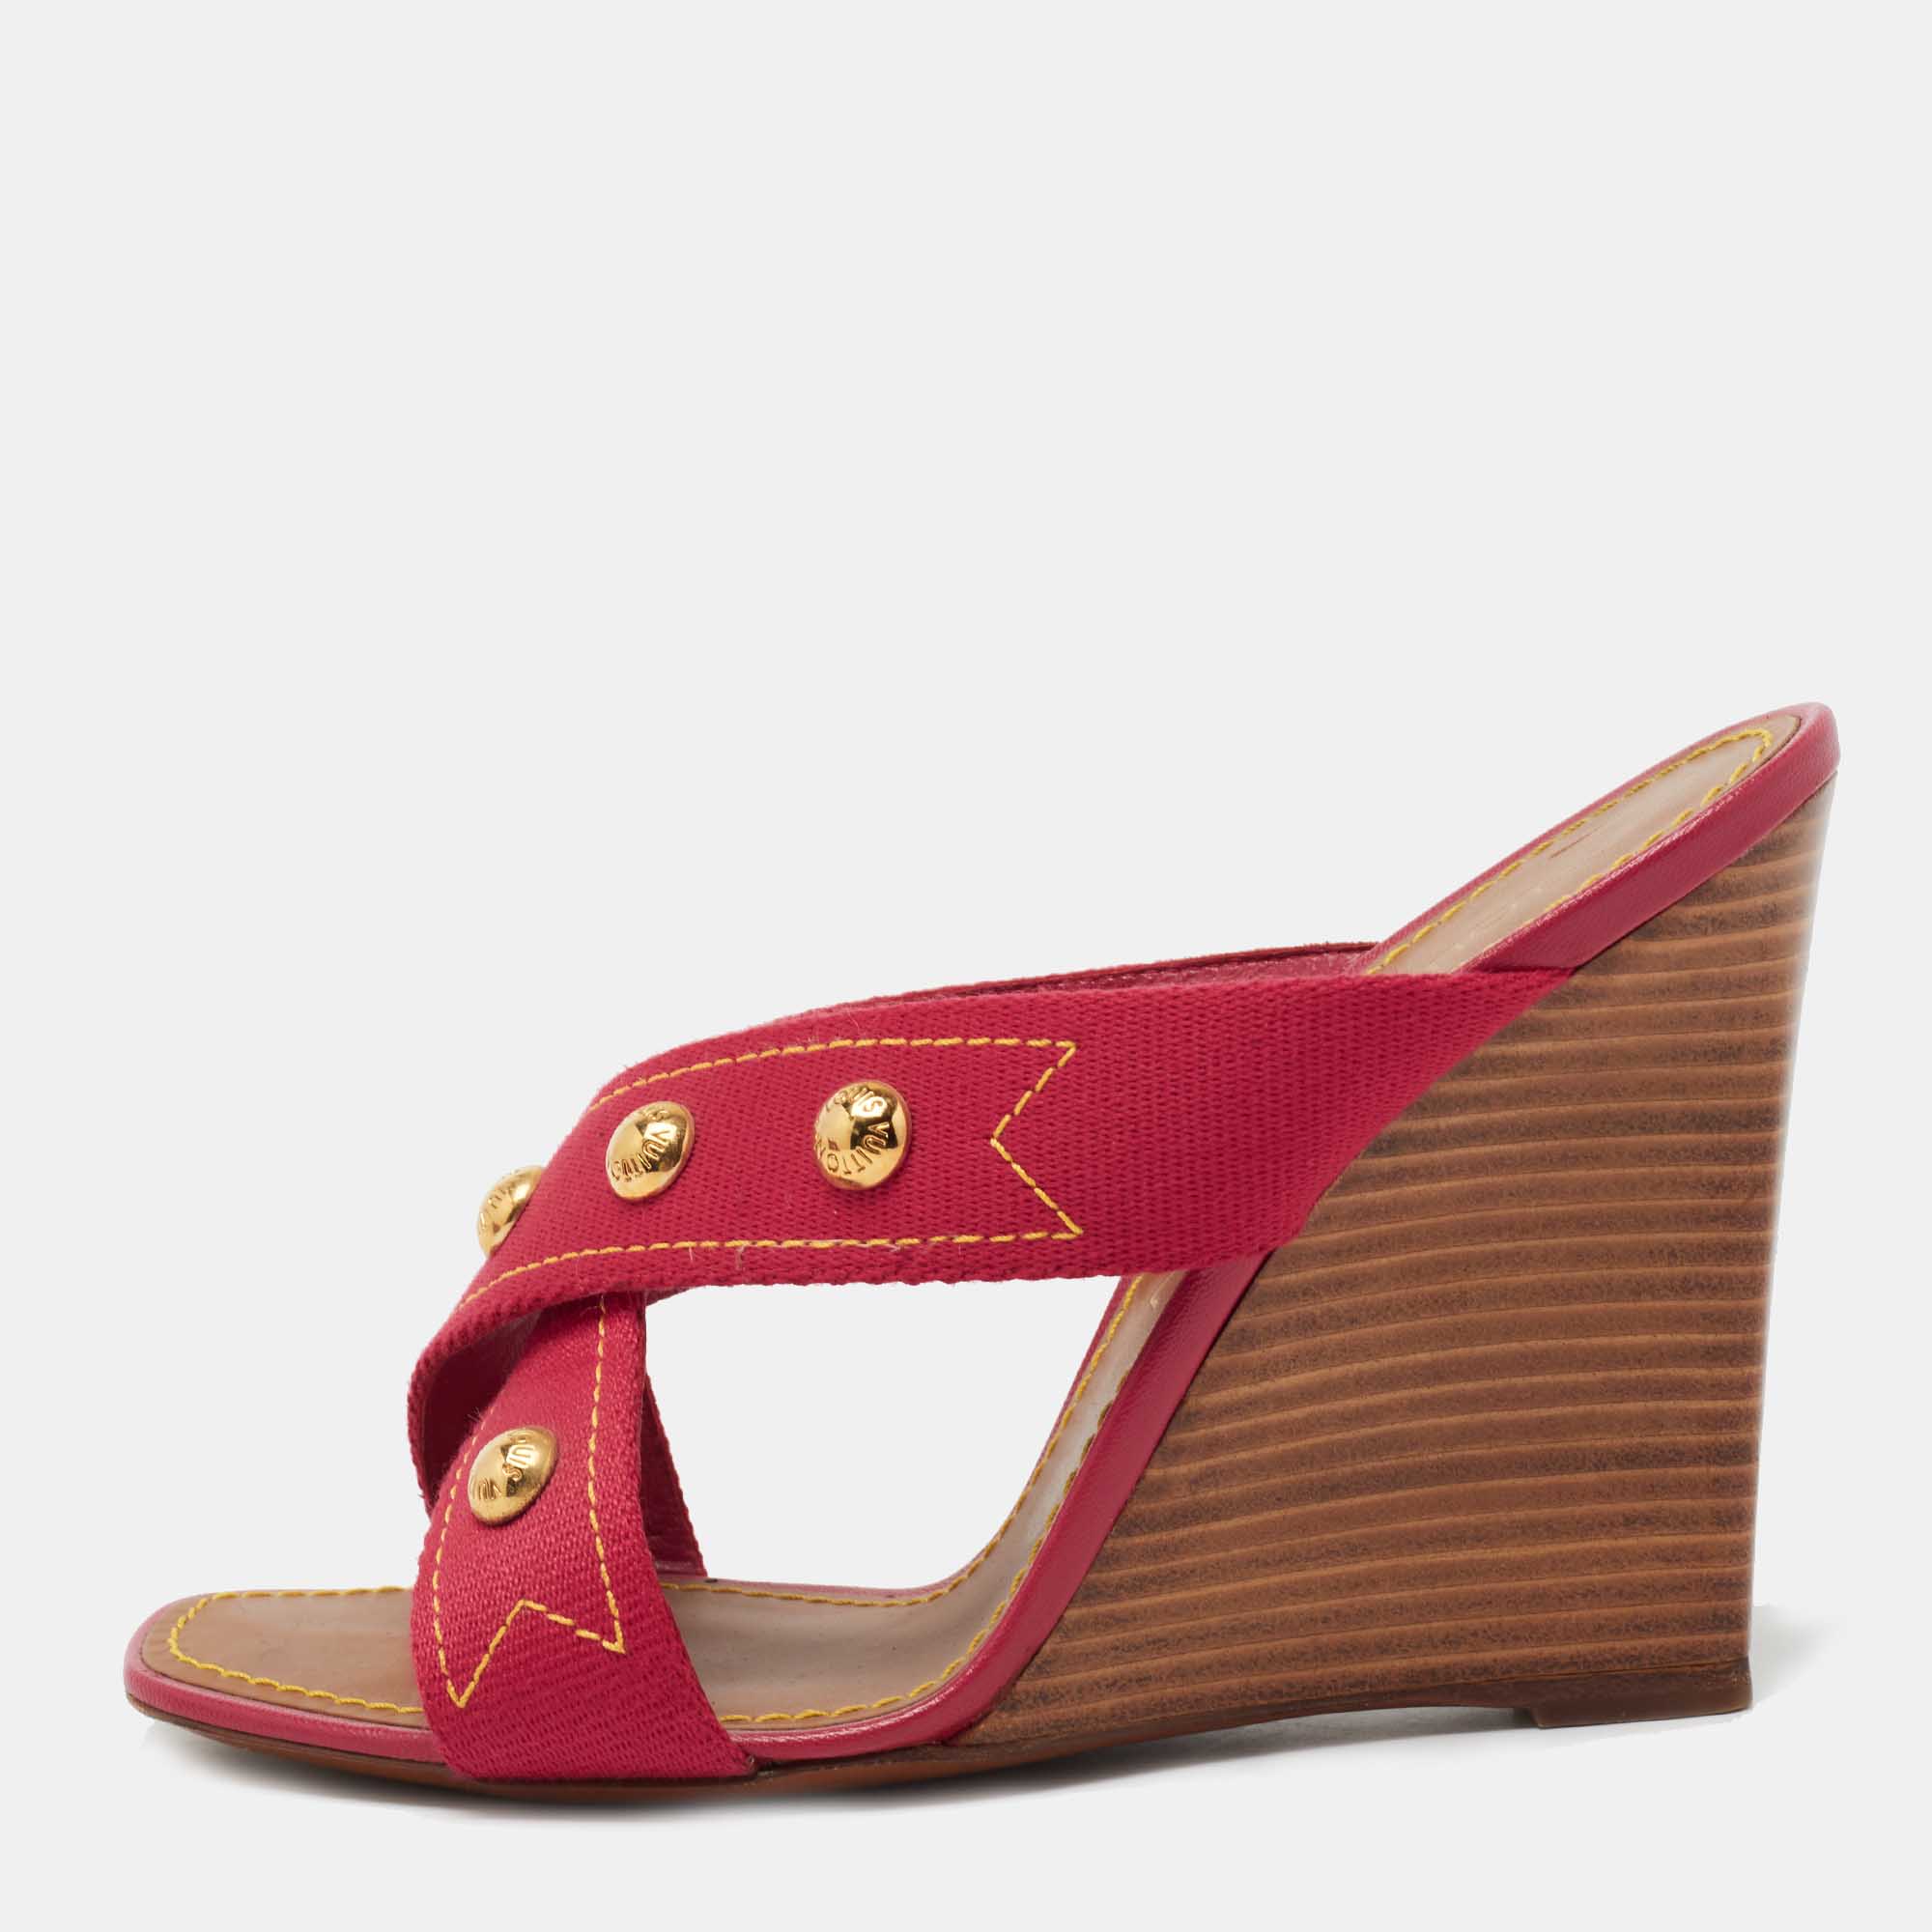 Louis Vuitton Red Canvas Crisscross Wedge Sandals Size 37